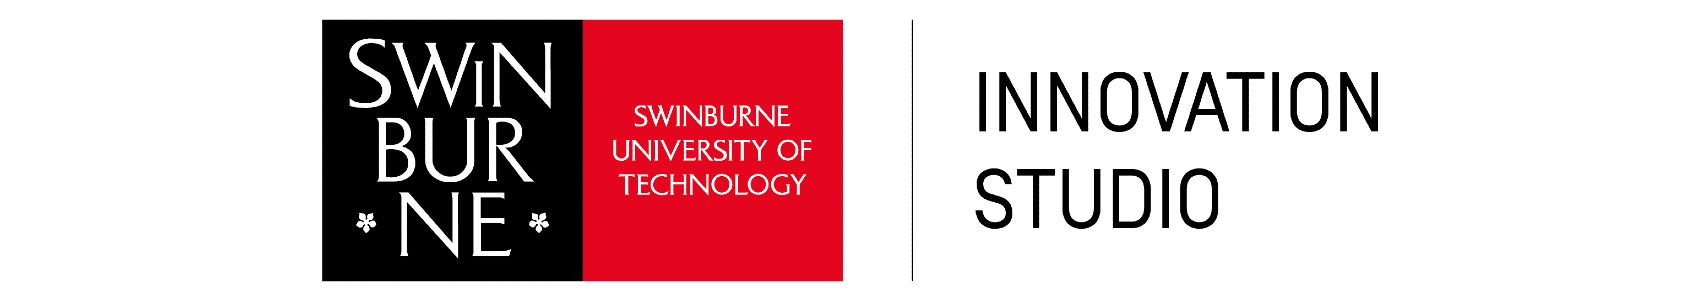 Swinburne Innovation Studio logo